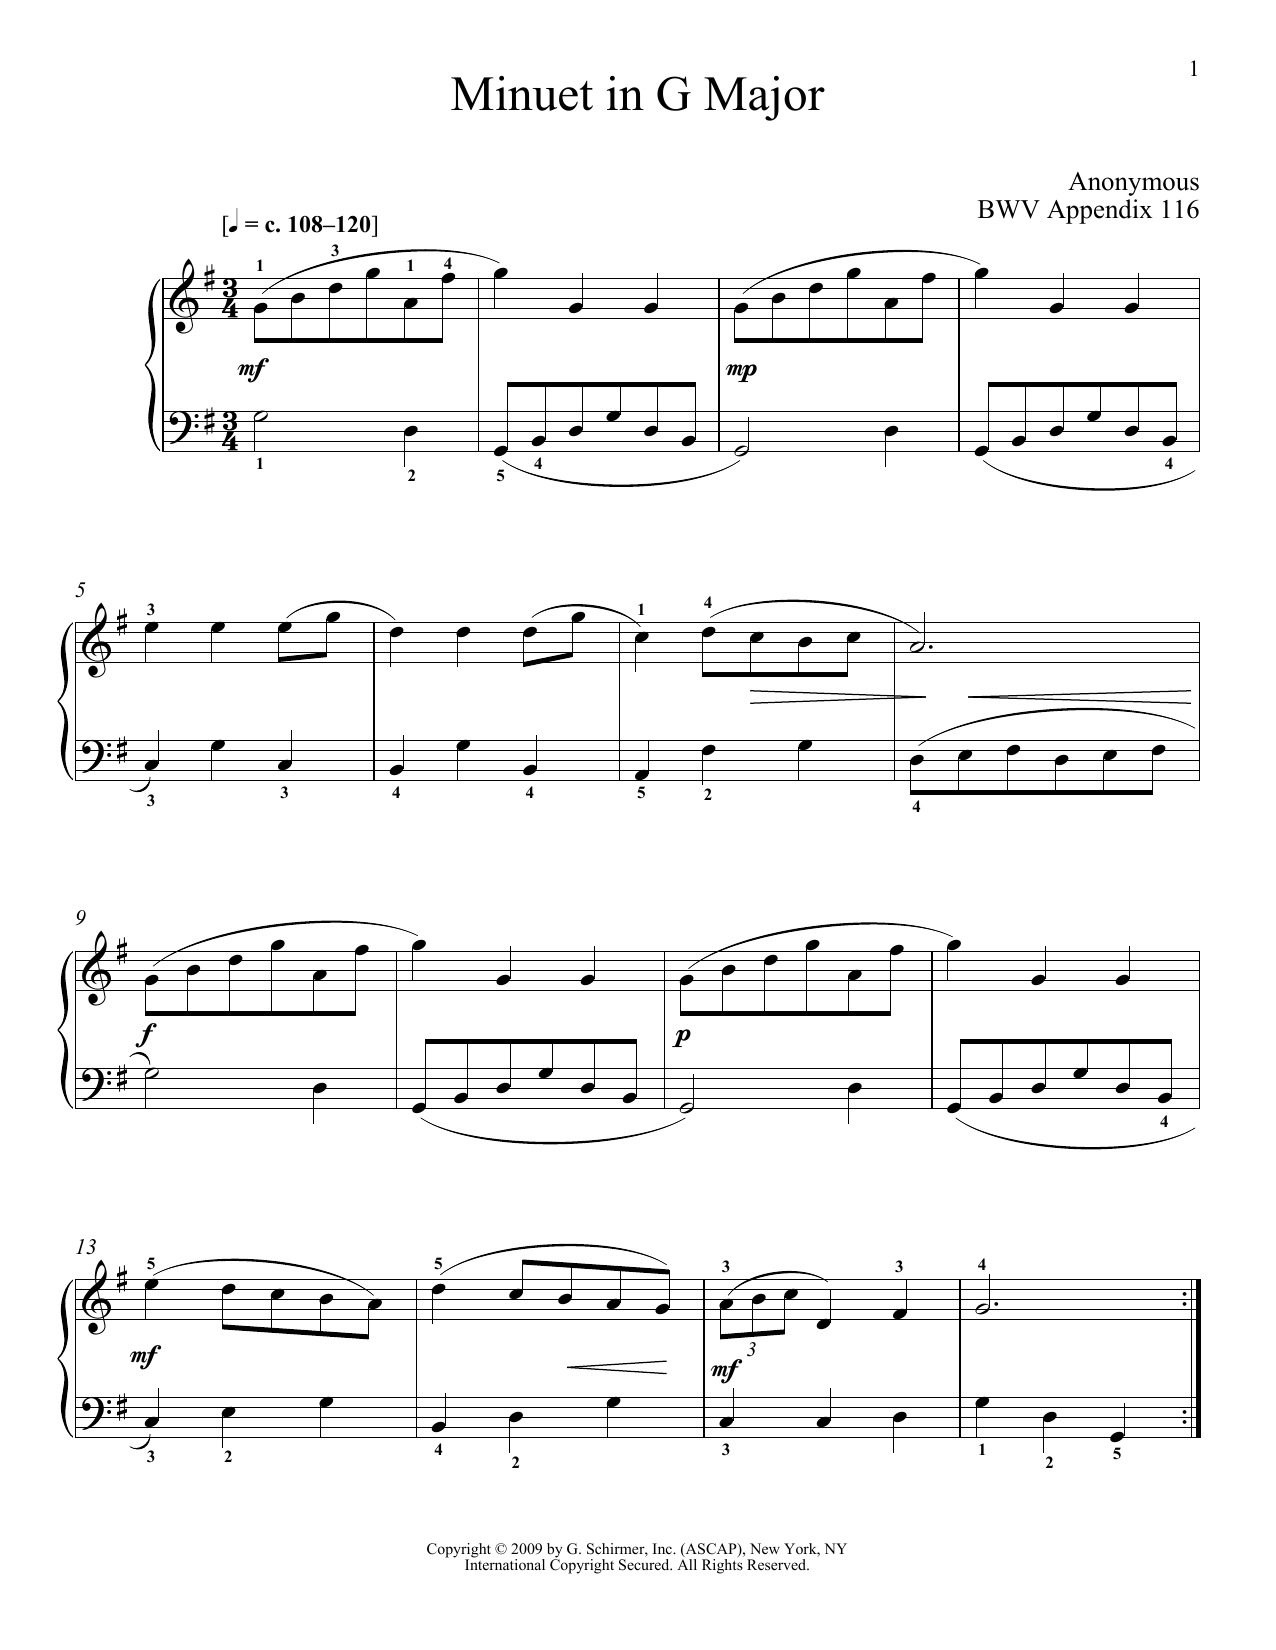 Johann Sebastian Bach Menuet In G Major, BWV App. 116 Sheet Music Notes & Chords for Piano - Download or Print PDF